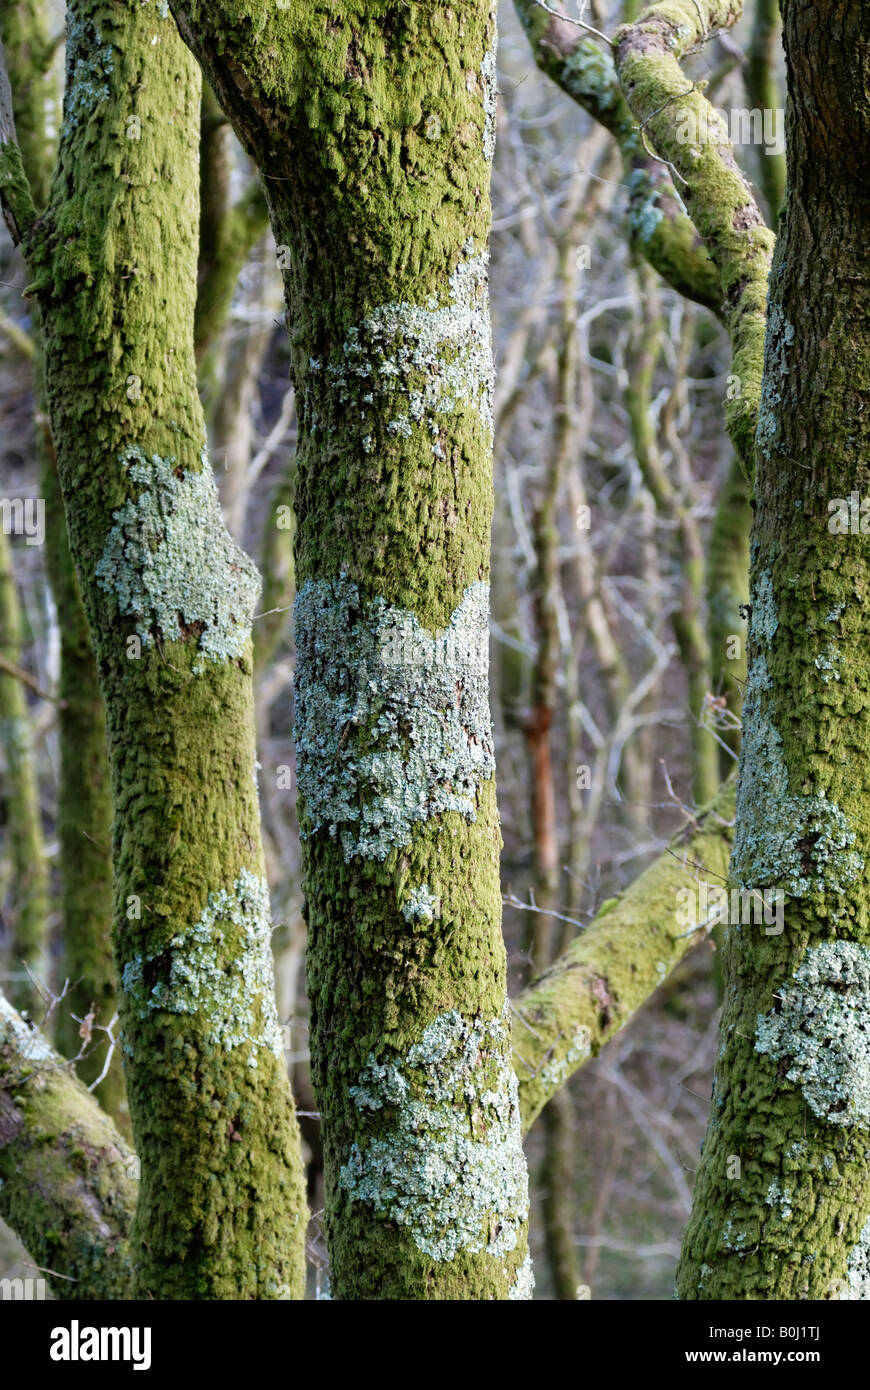 Physcia adscendens lichen on Sessile Oak trunks Quercus petraea, Wales, UK. Stock Photo